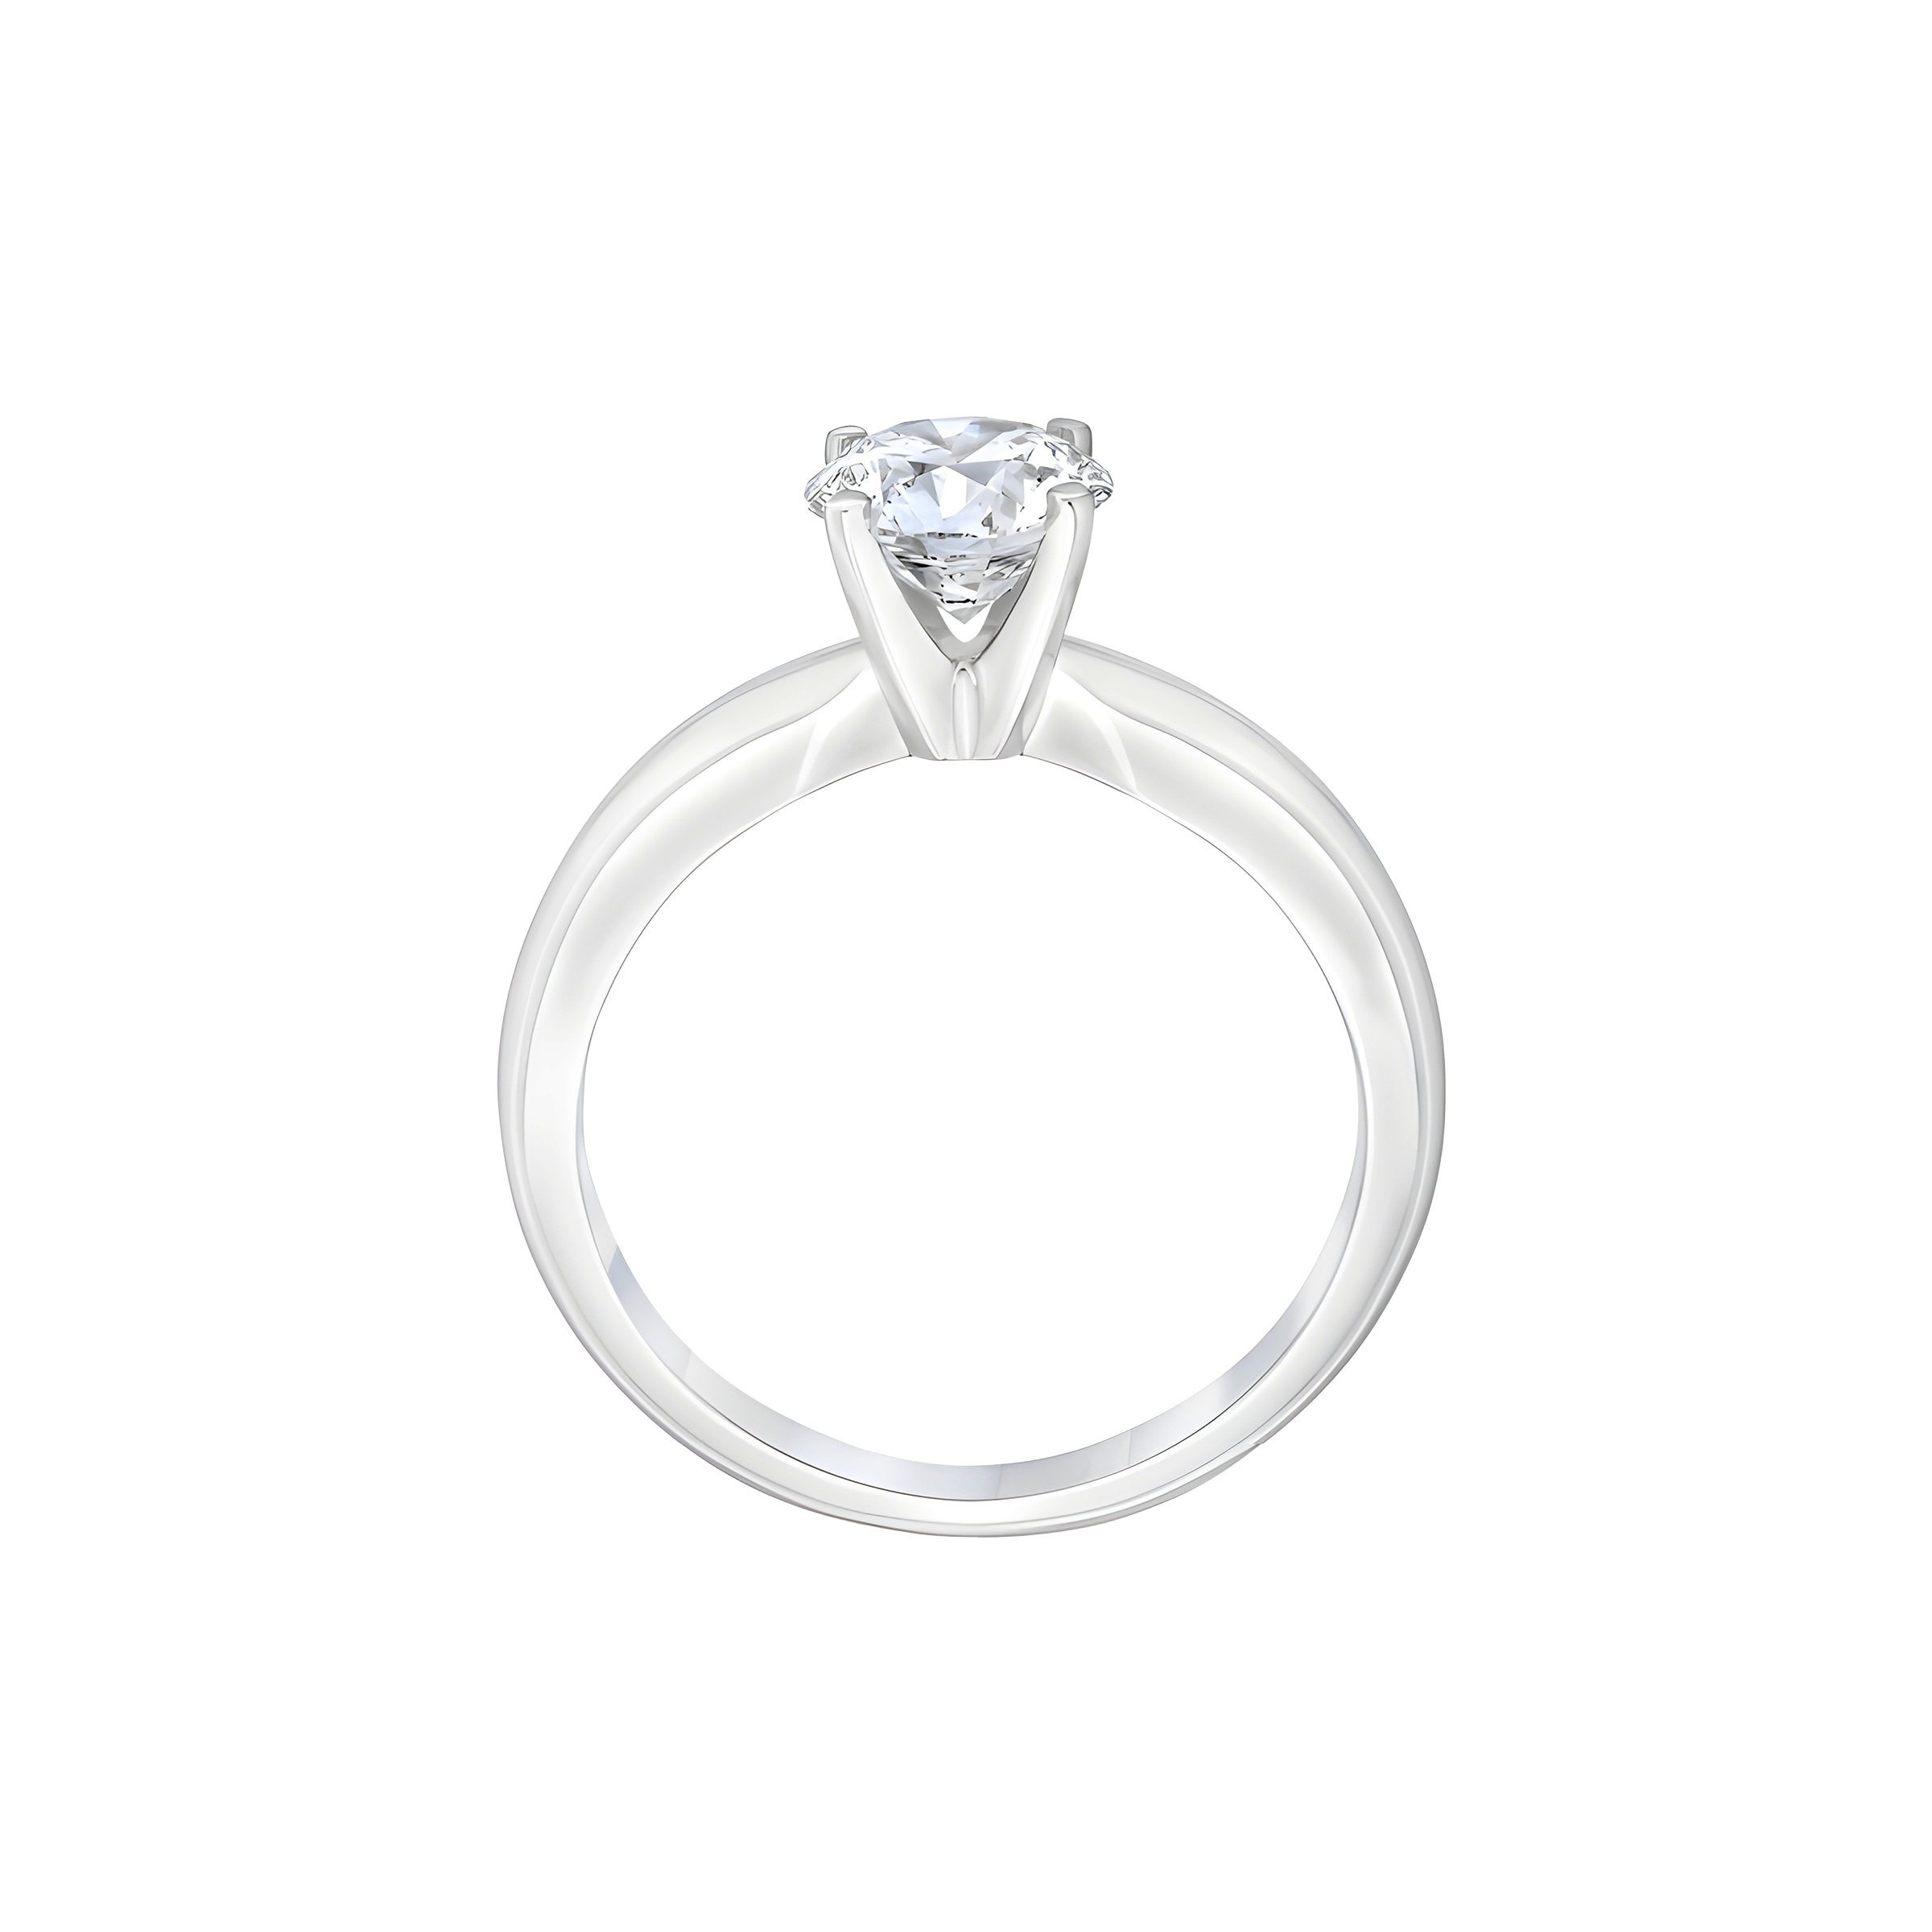 Four Prong Round Brilliant Solitaire Diamond Engagement Ring in Platinum